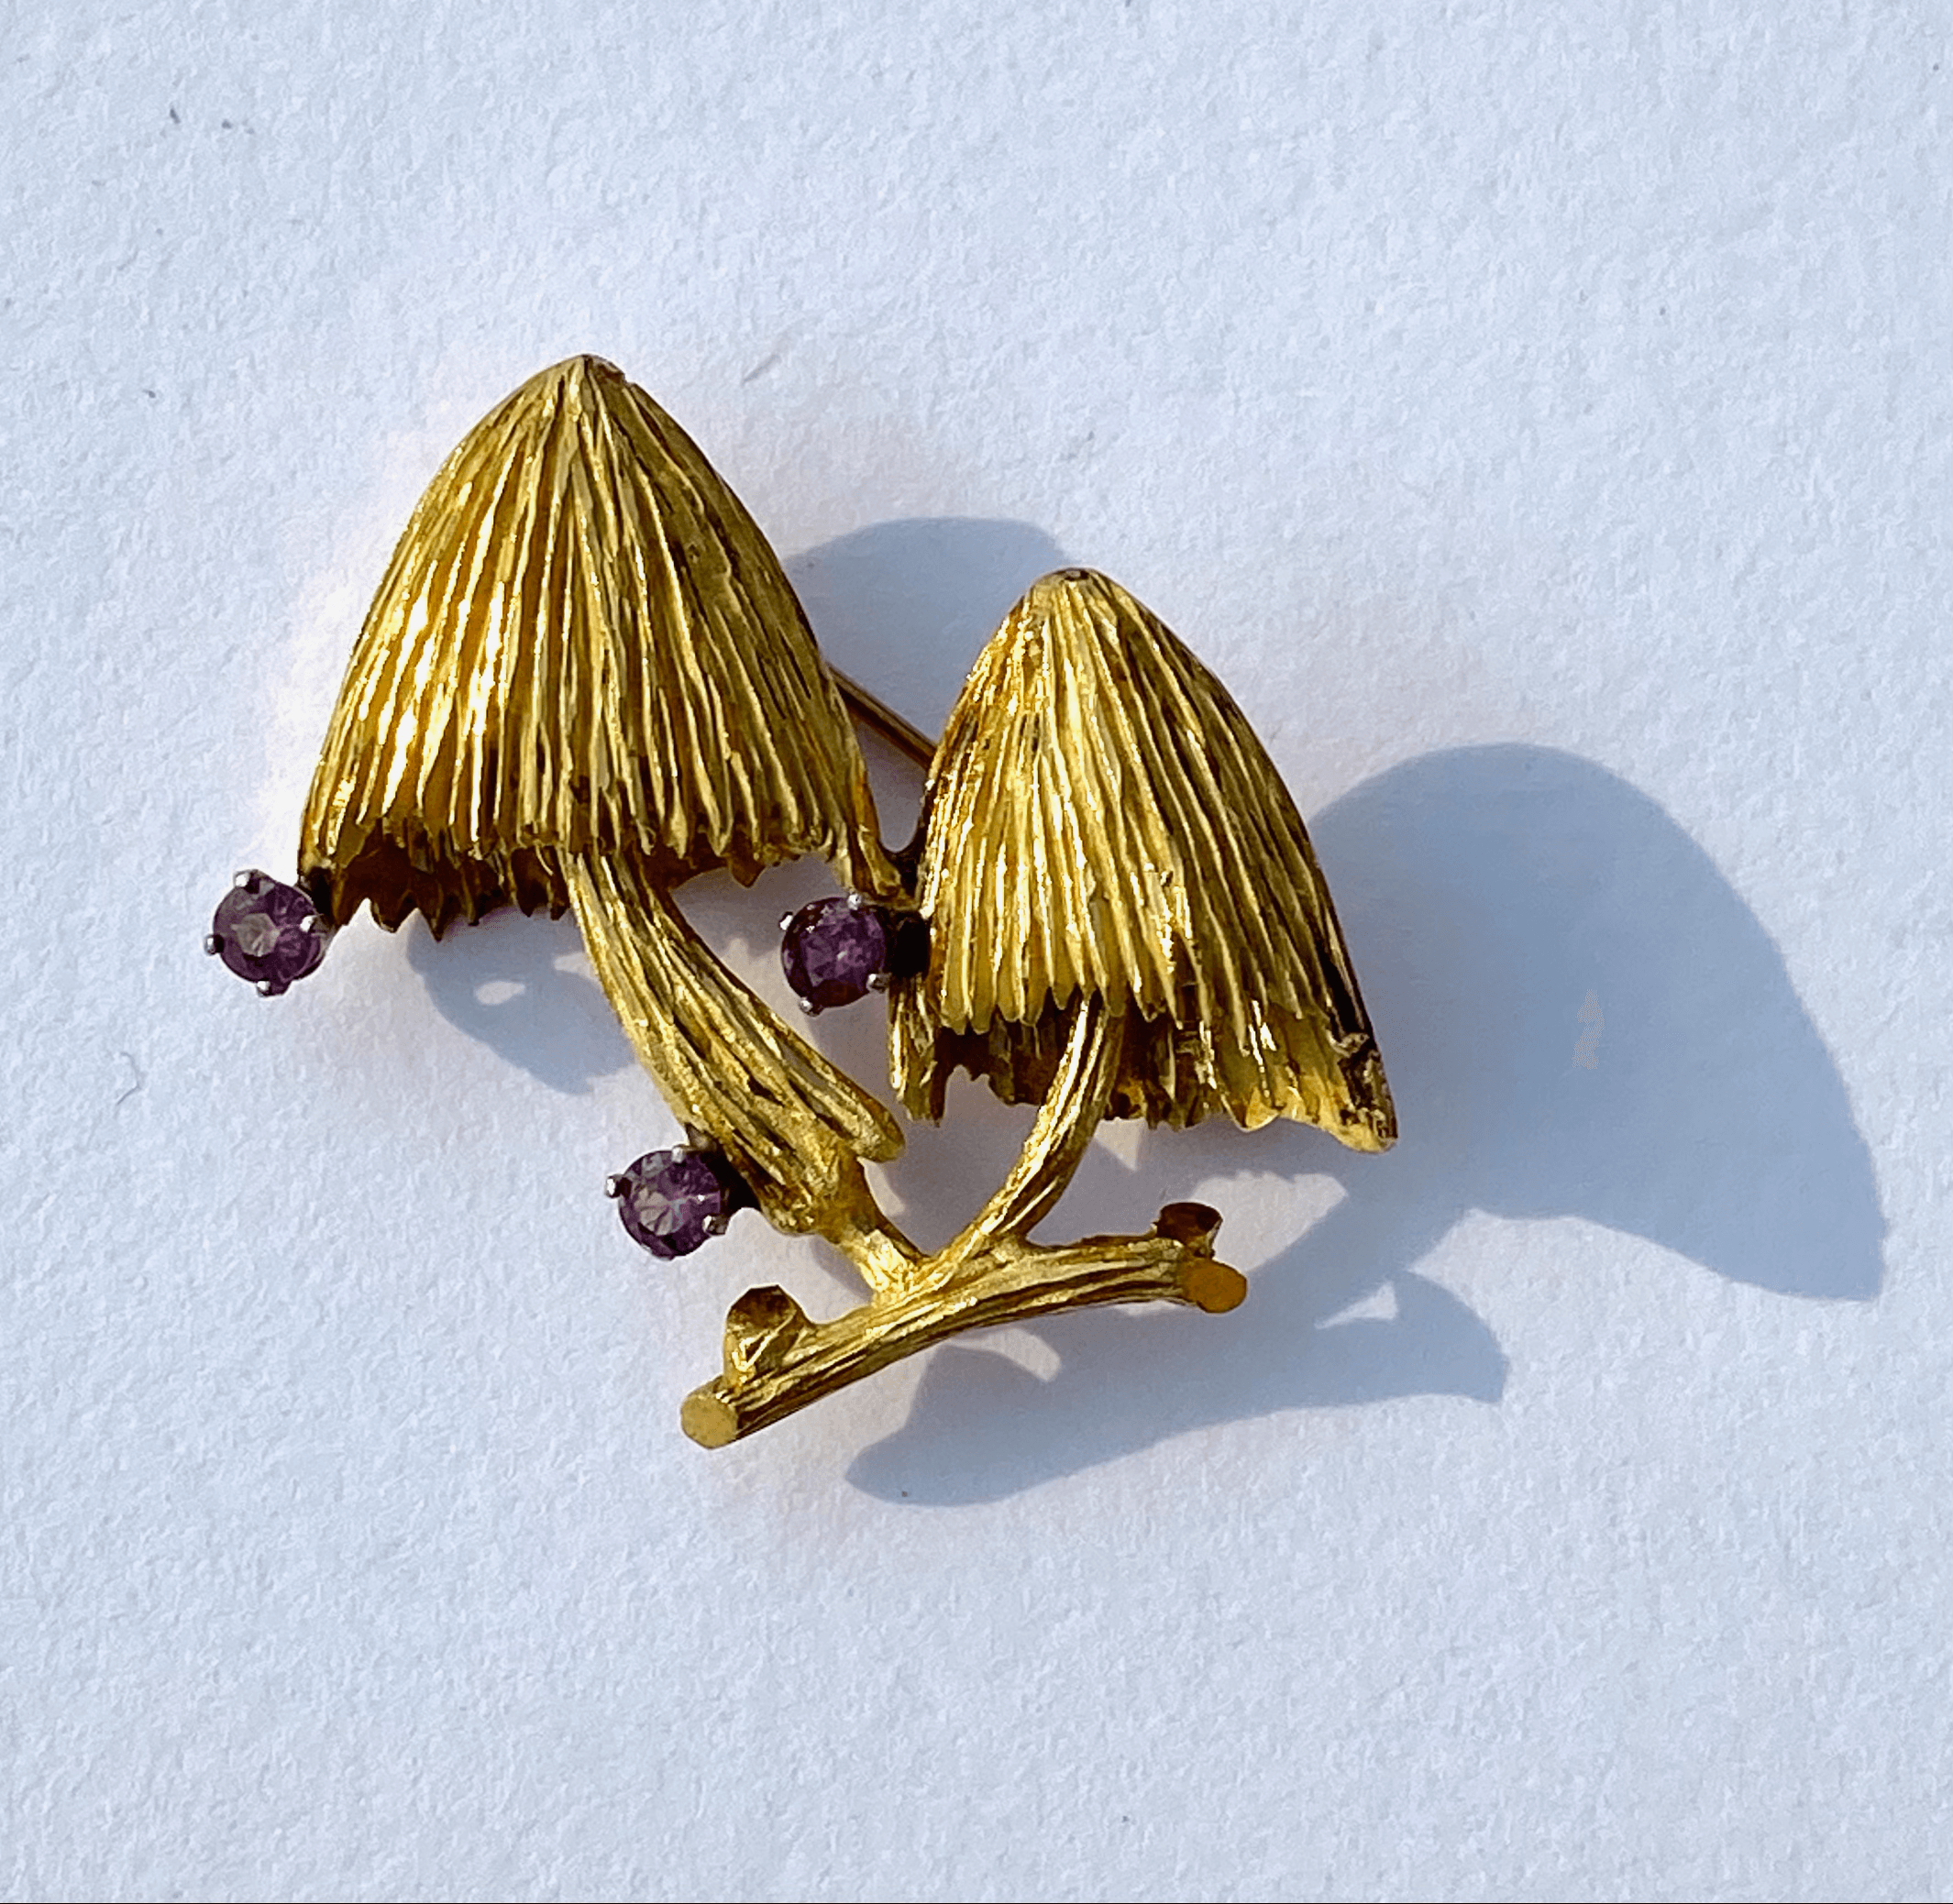 Vintage 18K Gold Mushrooms with Rubies - Tuxedo Park Junk Shop